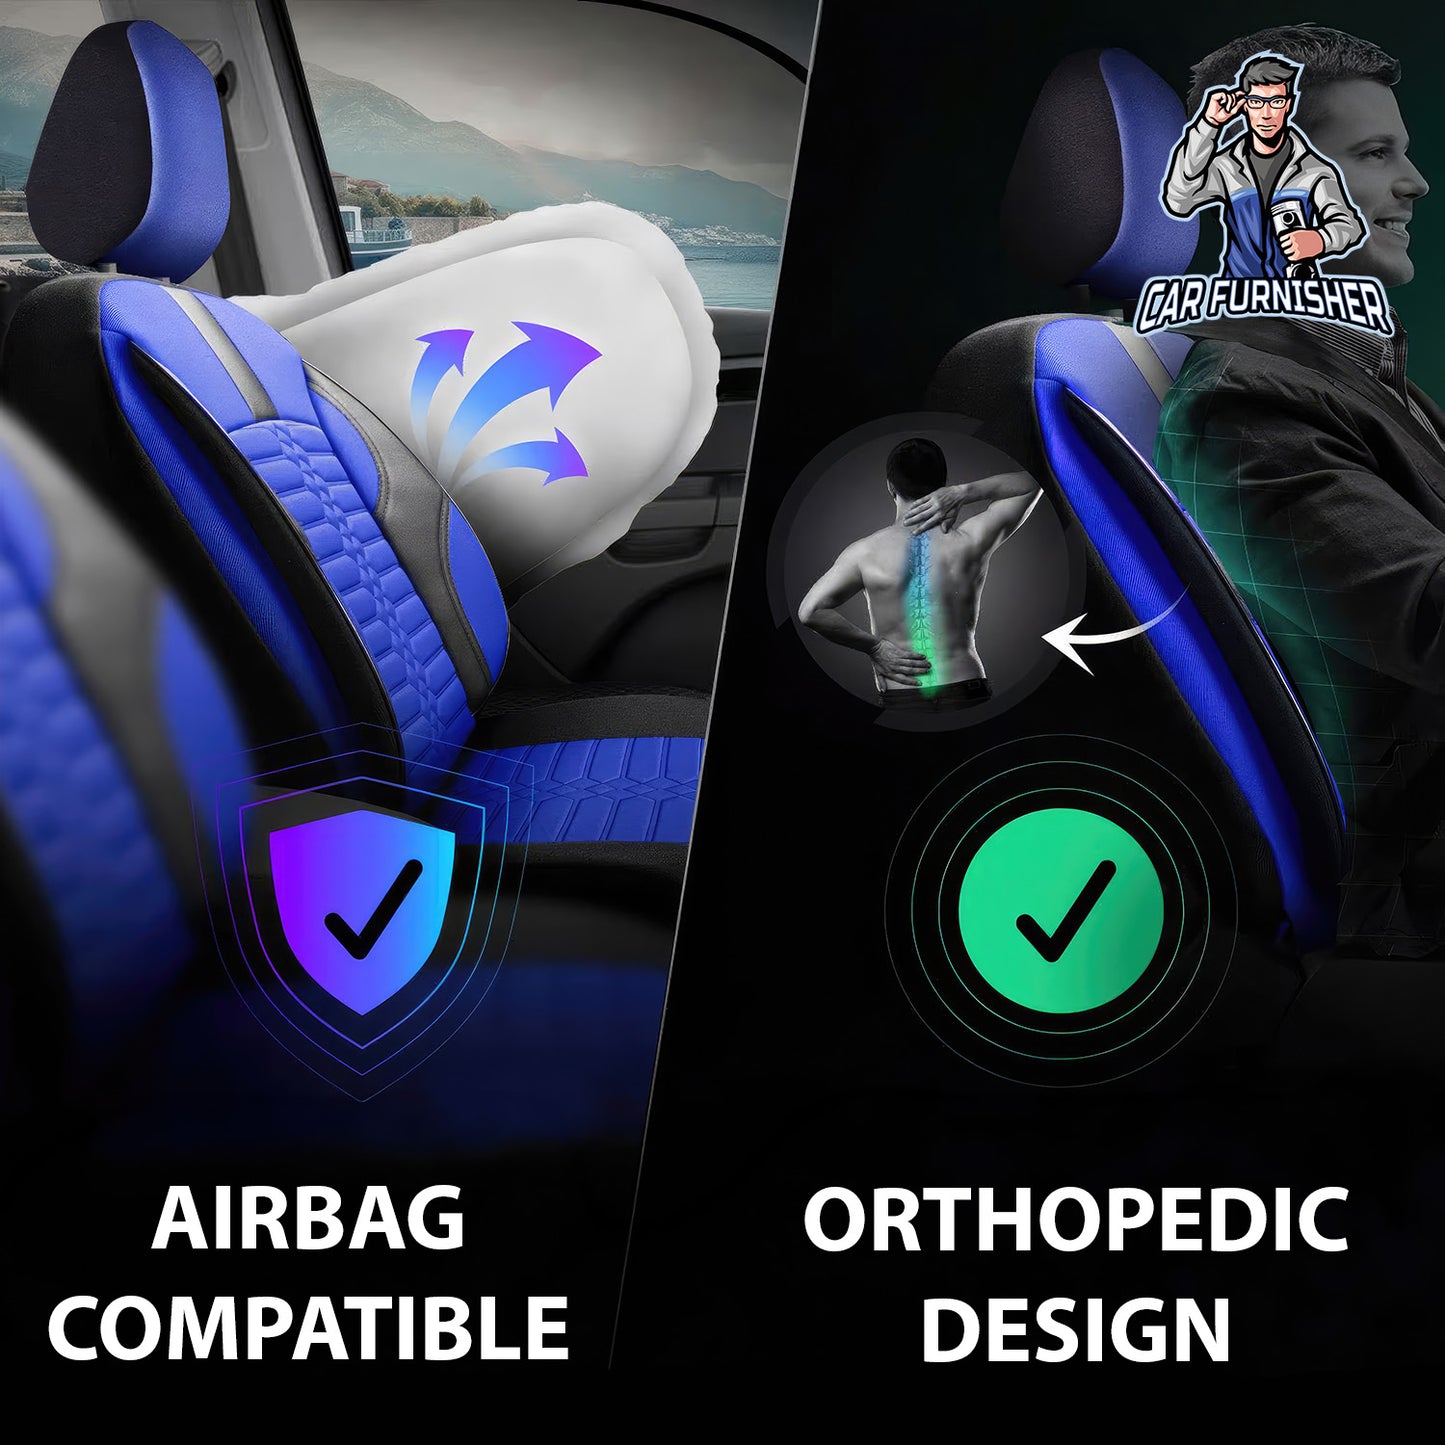 Car Seat Cover Set - Athens Design Blue 5 Seats + Headrests (Full Set) Leather & Jacquard Fabric